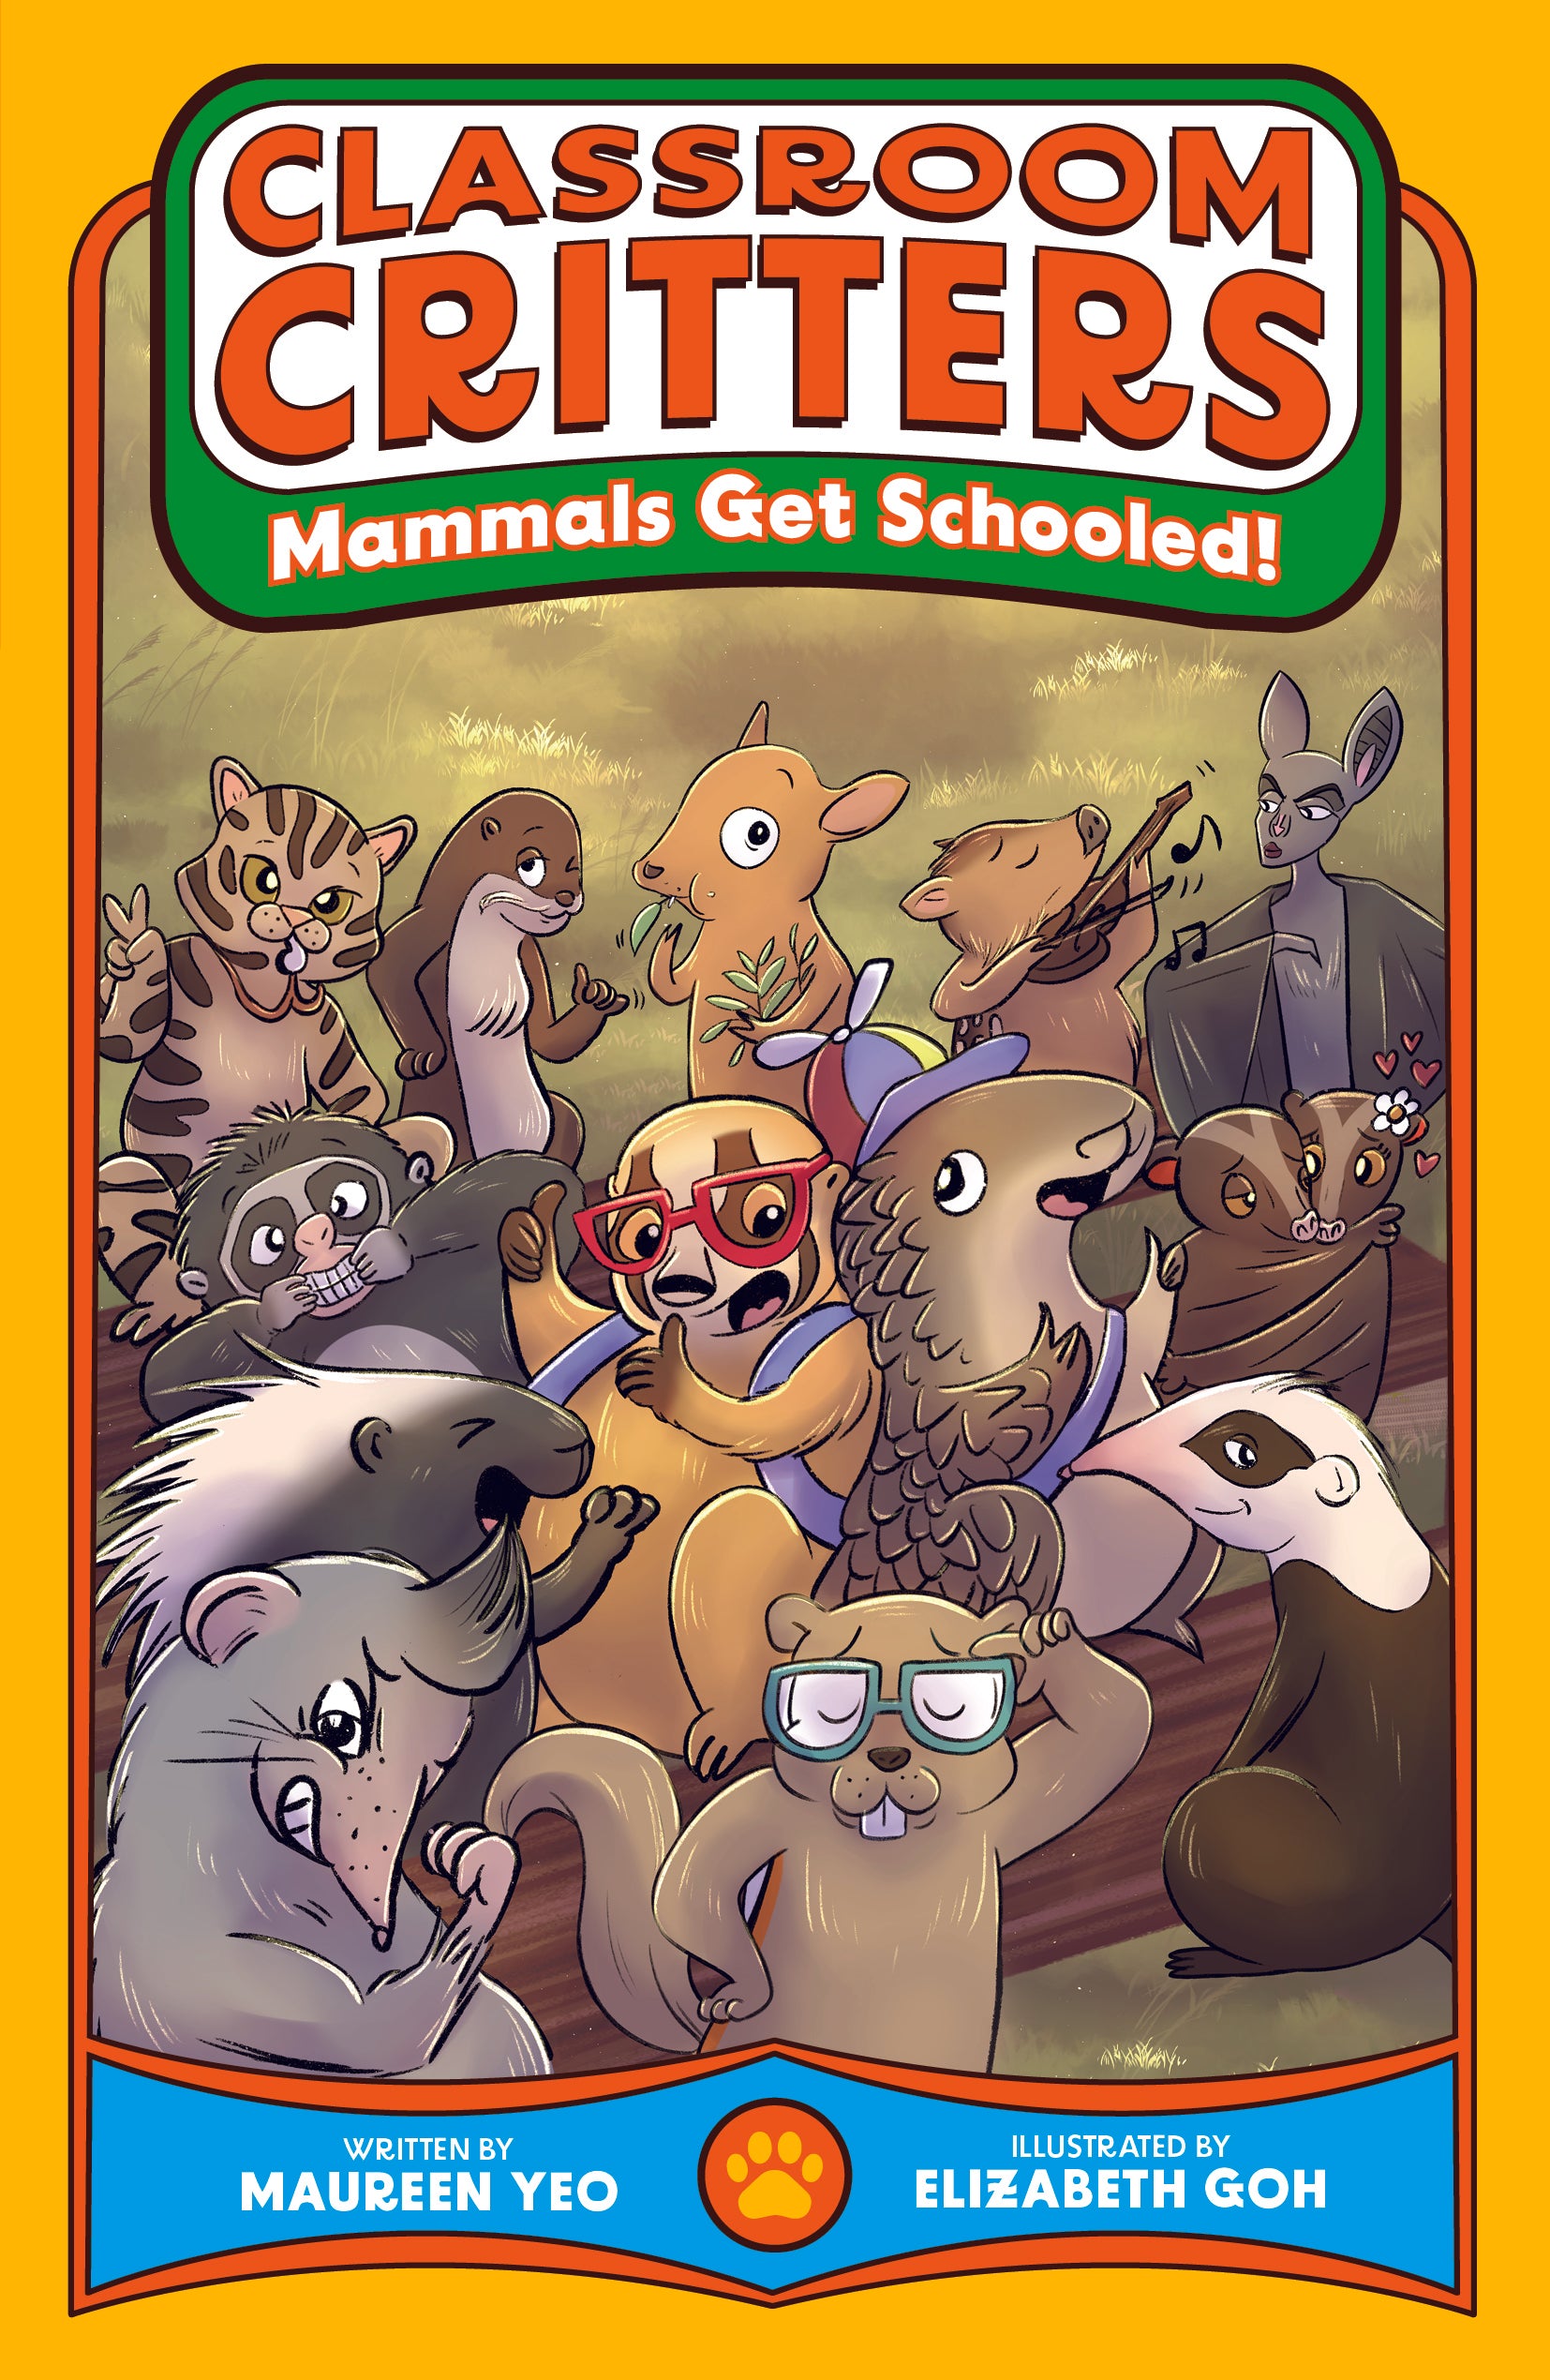 Classroom Critters: Mammals Get Schooled! (Book 1)